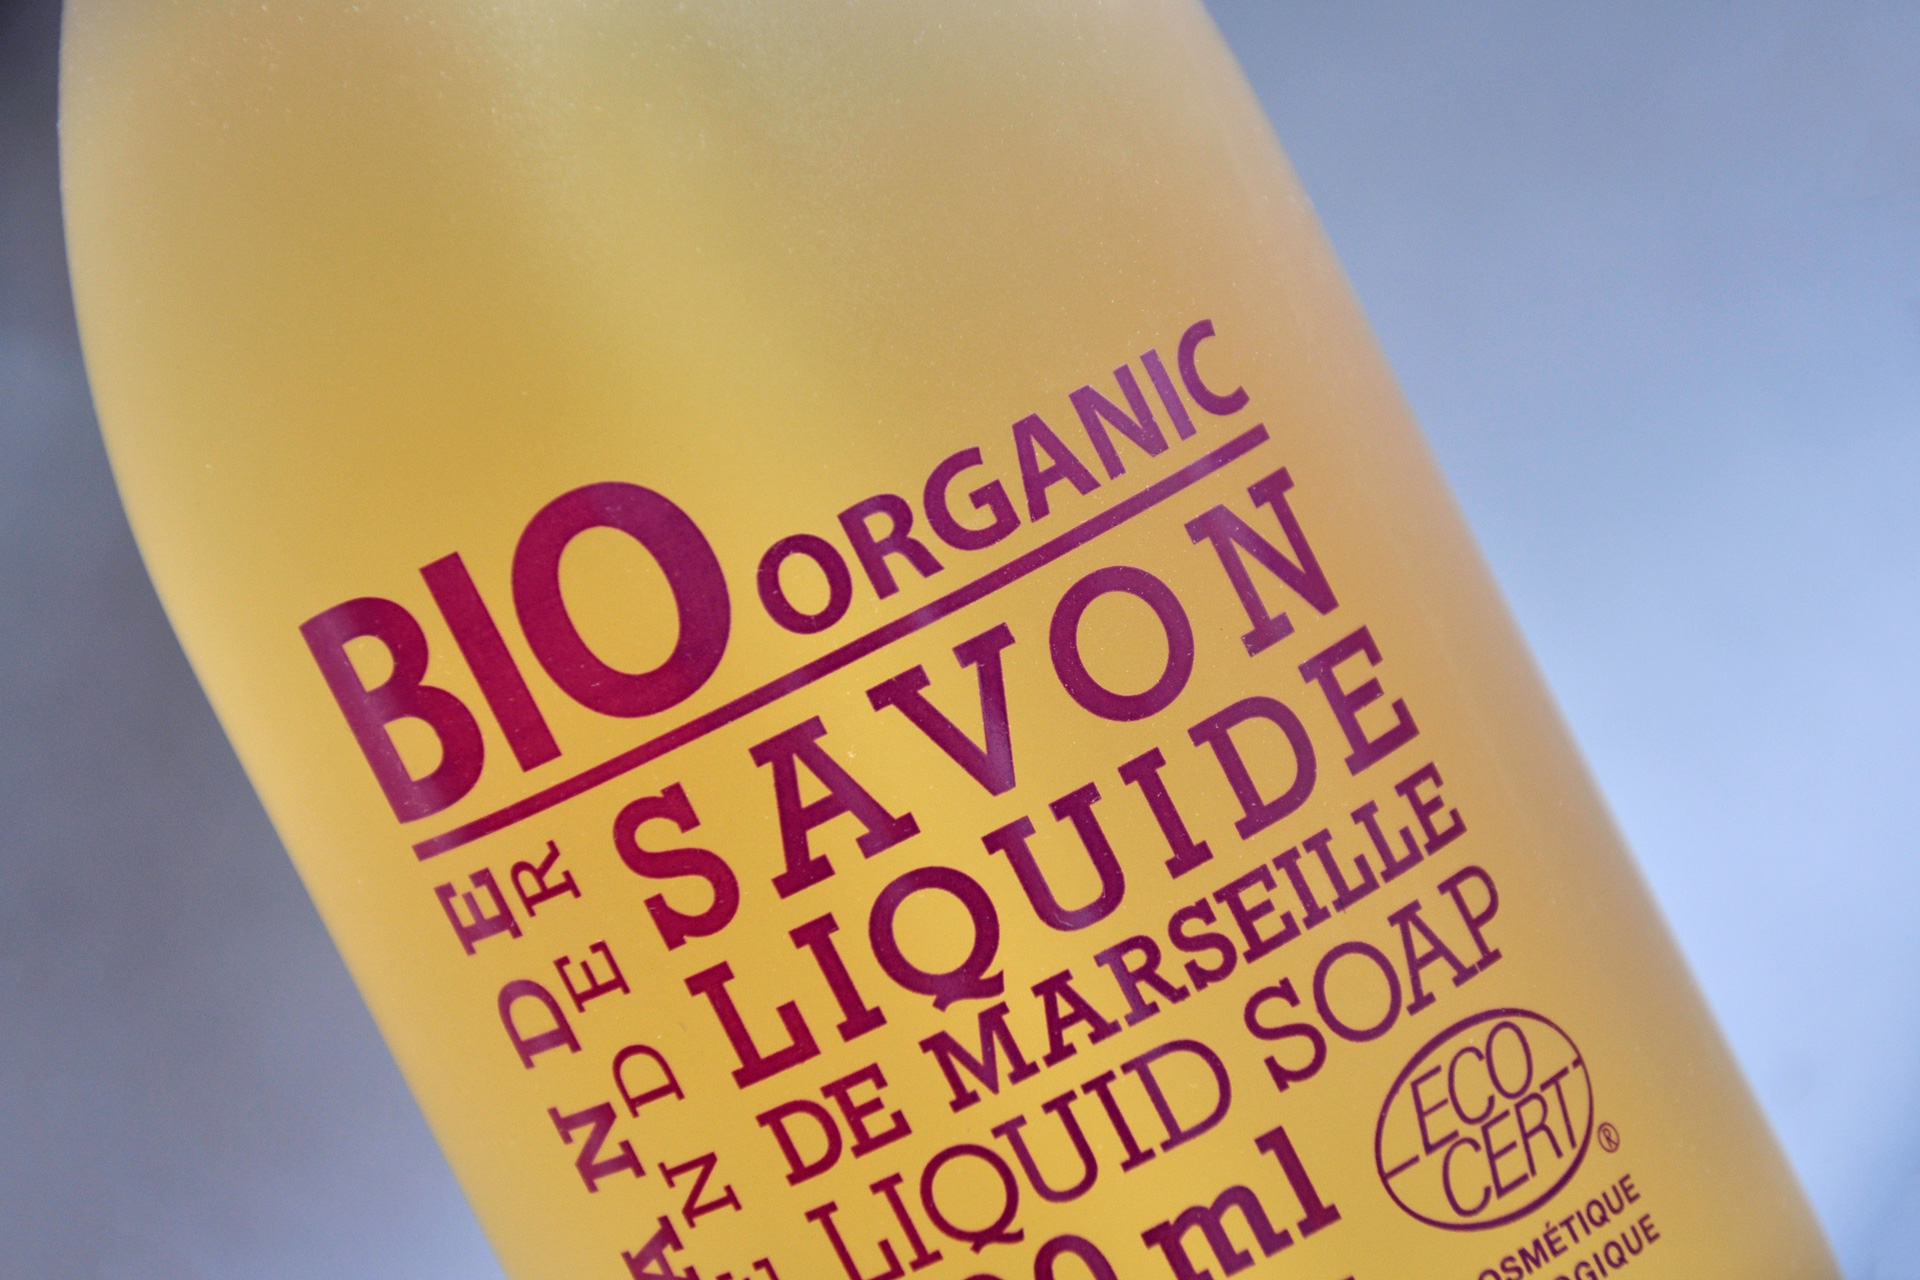 la-compagnie-de-provence-packaging-savon-plastac-bio-organic